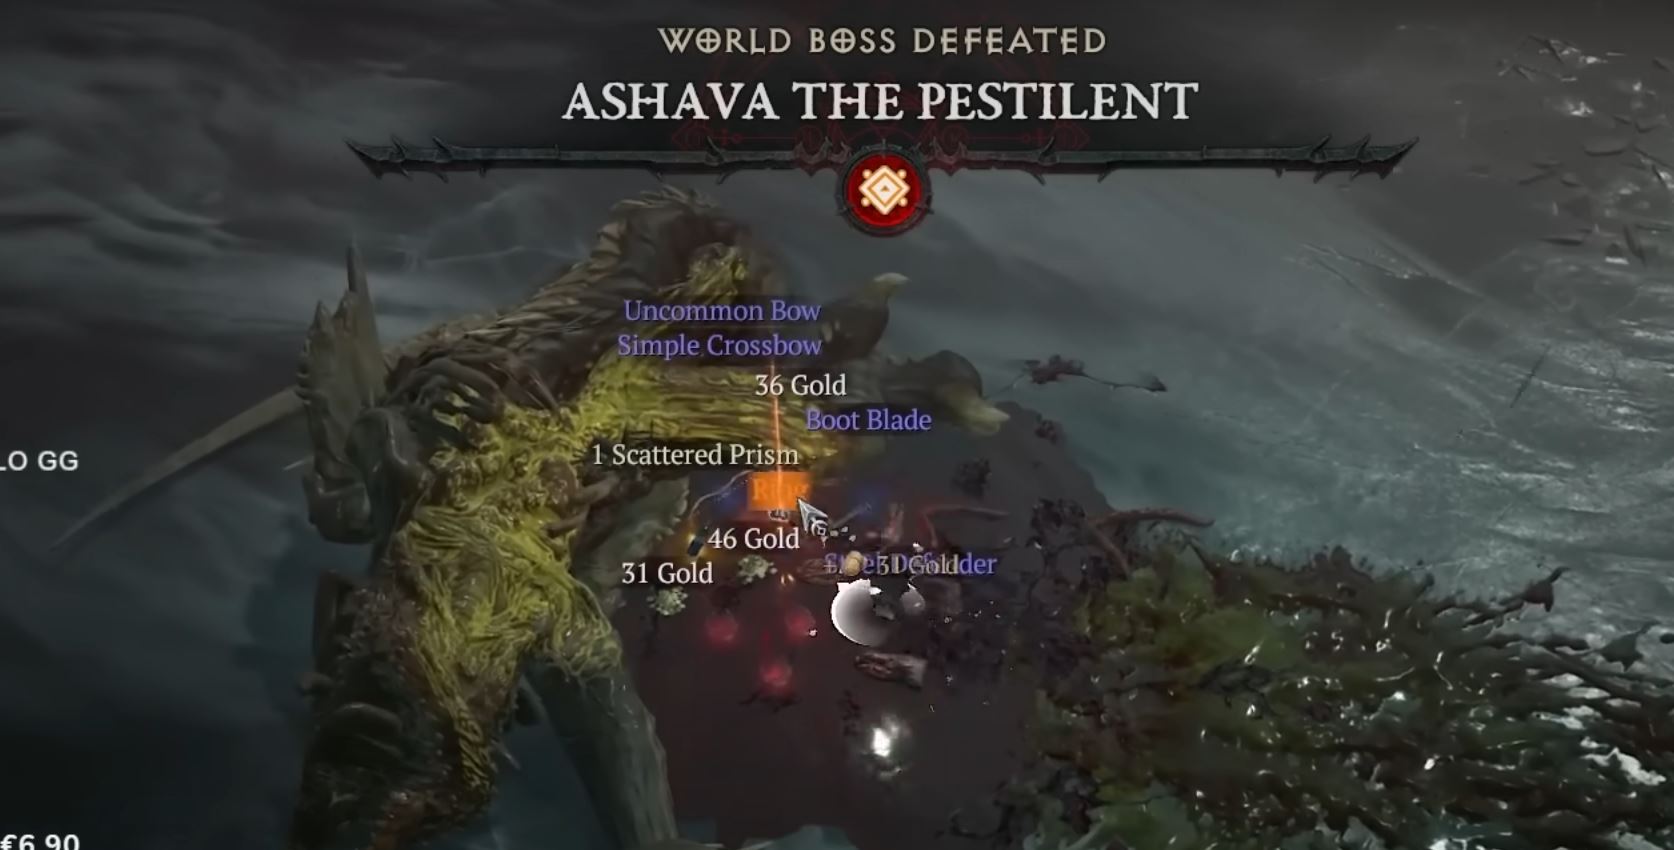 Wudijo defeated the world boss Ashava during the Diablo IV server slam event